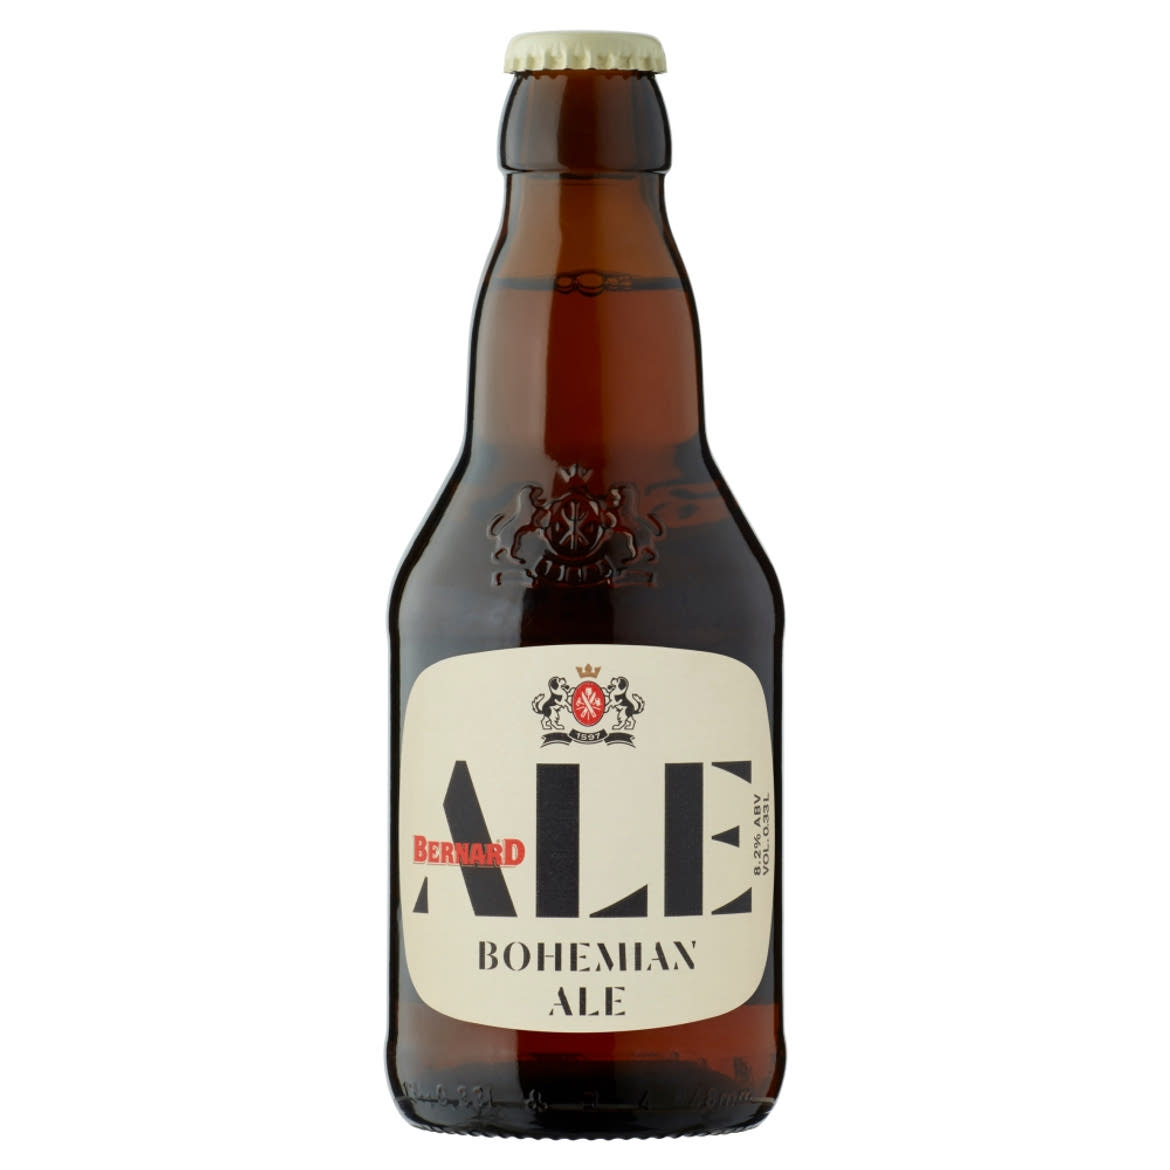 Bernard Bohemian Ale cseh világos sör 8,2%